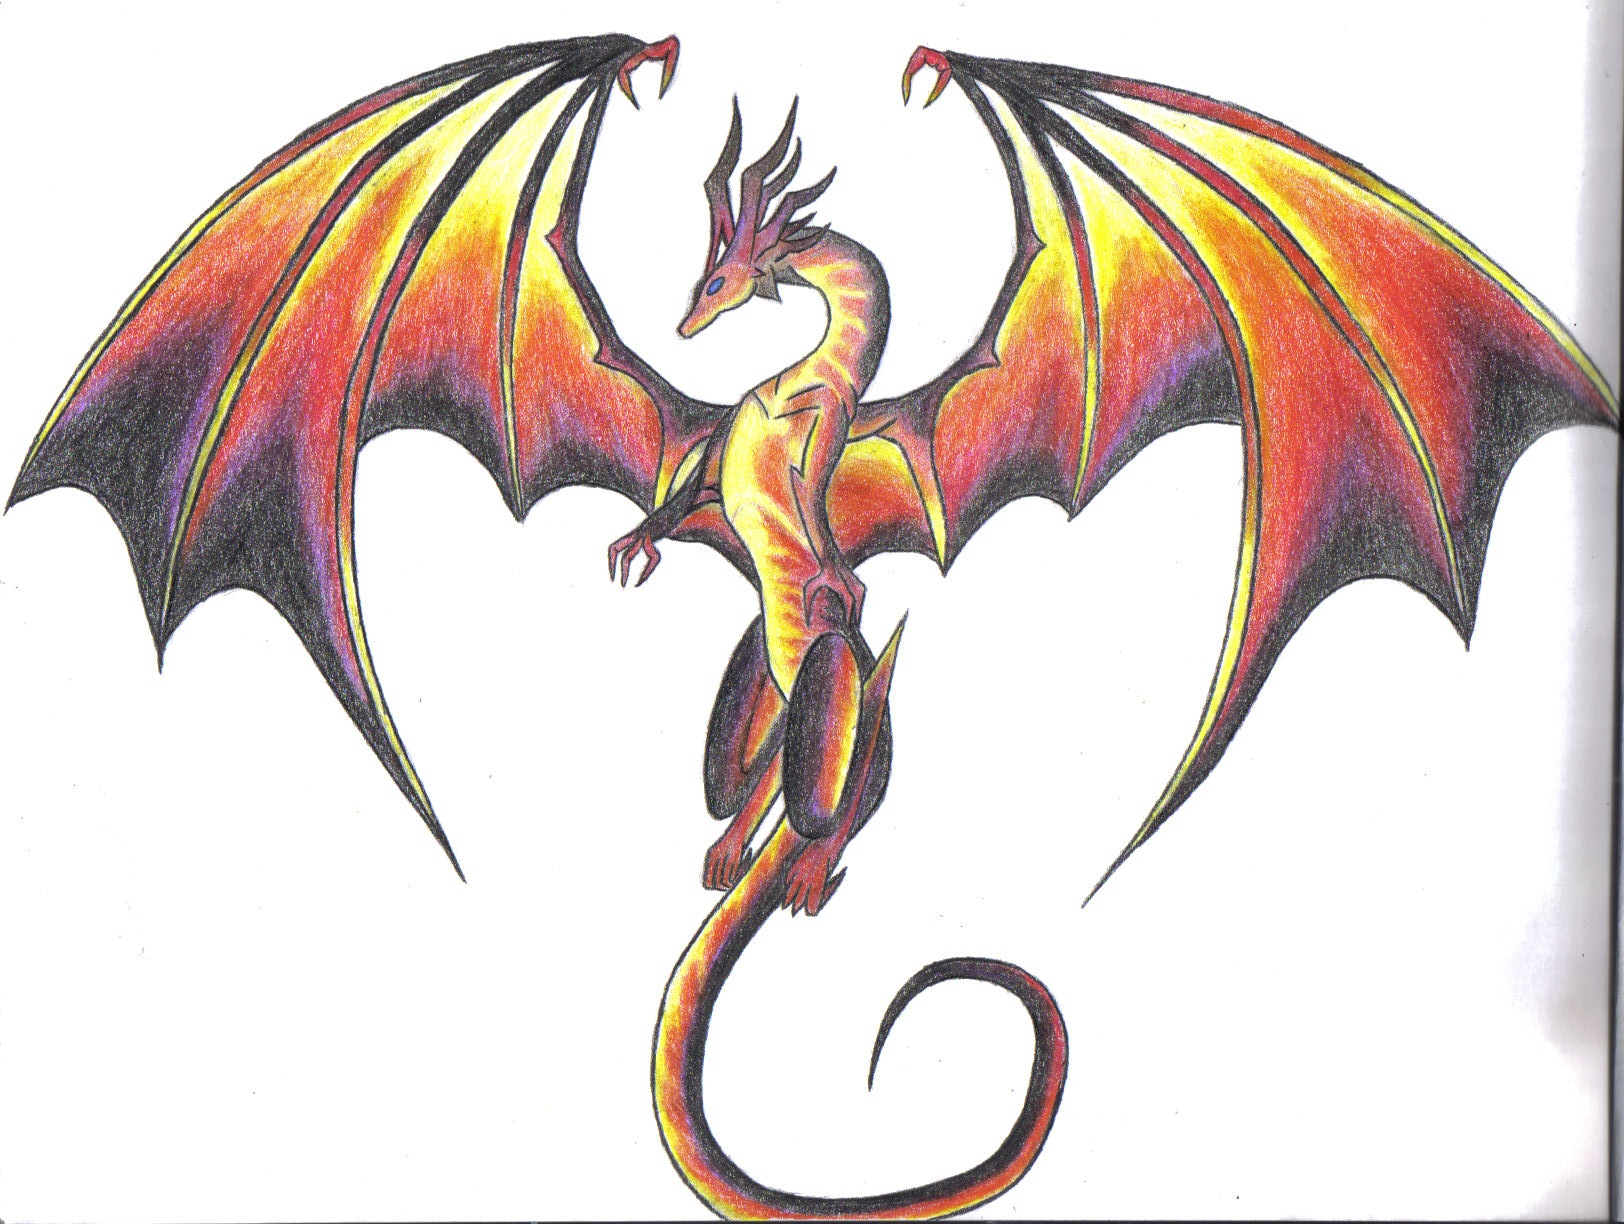 dragon sketch iphone